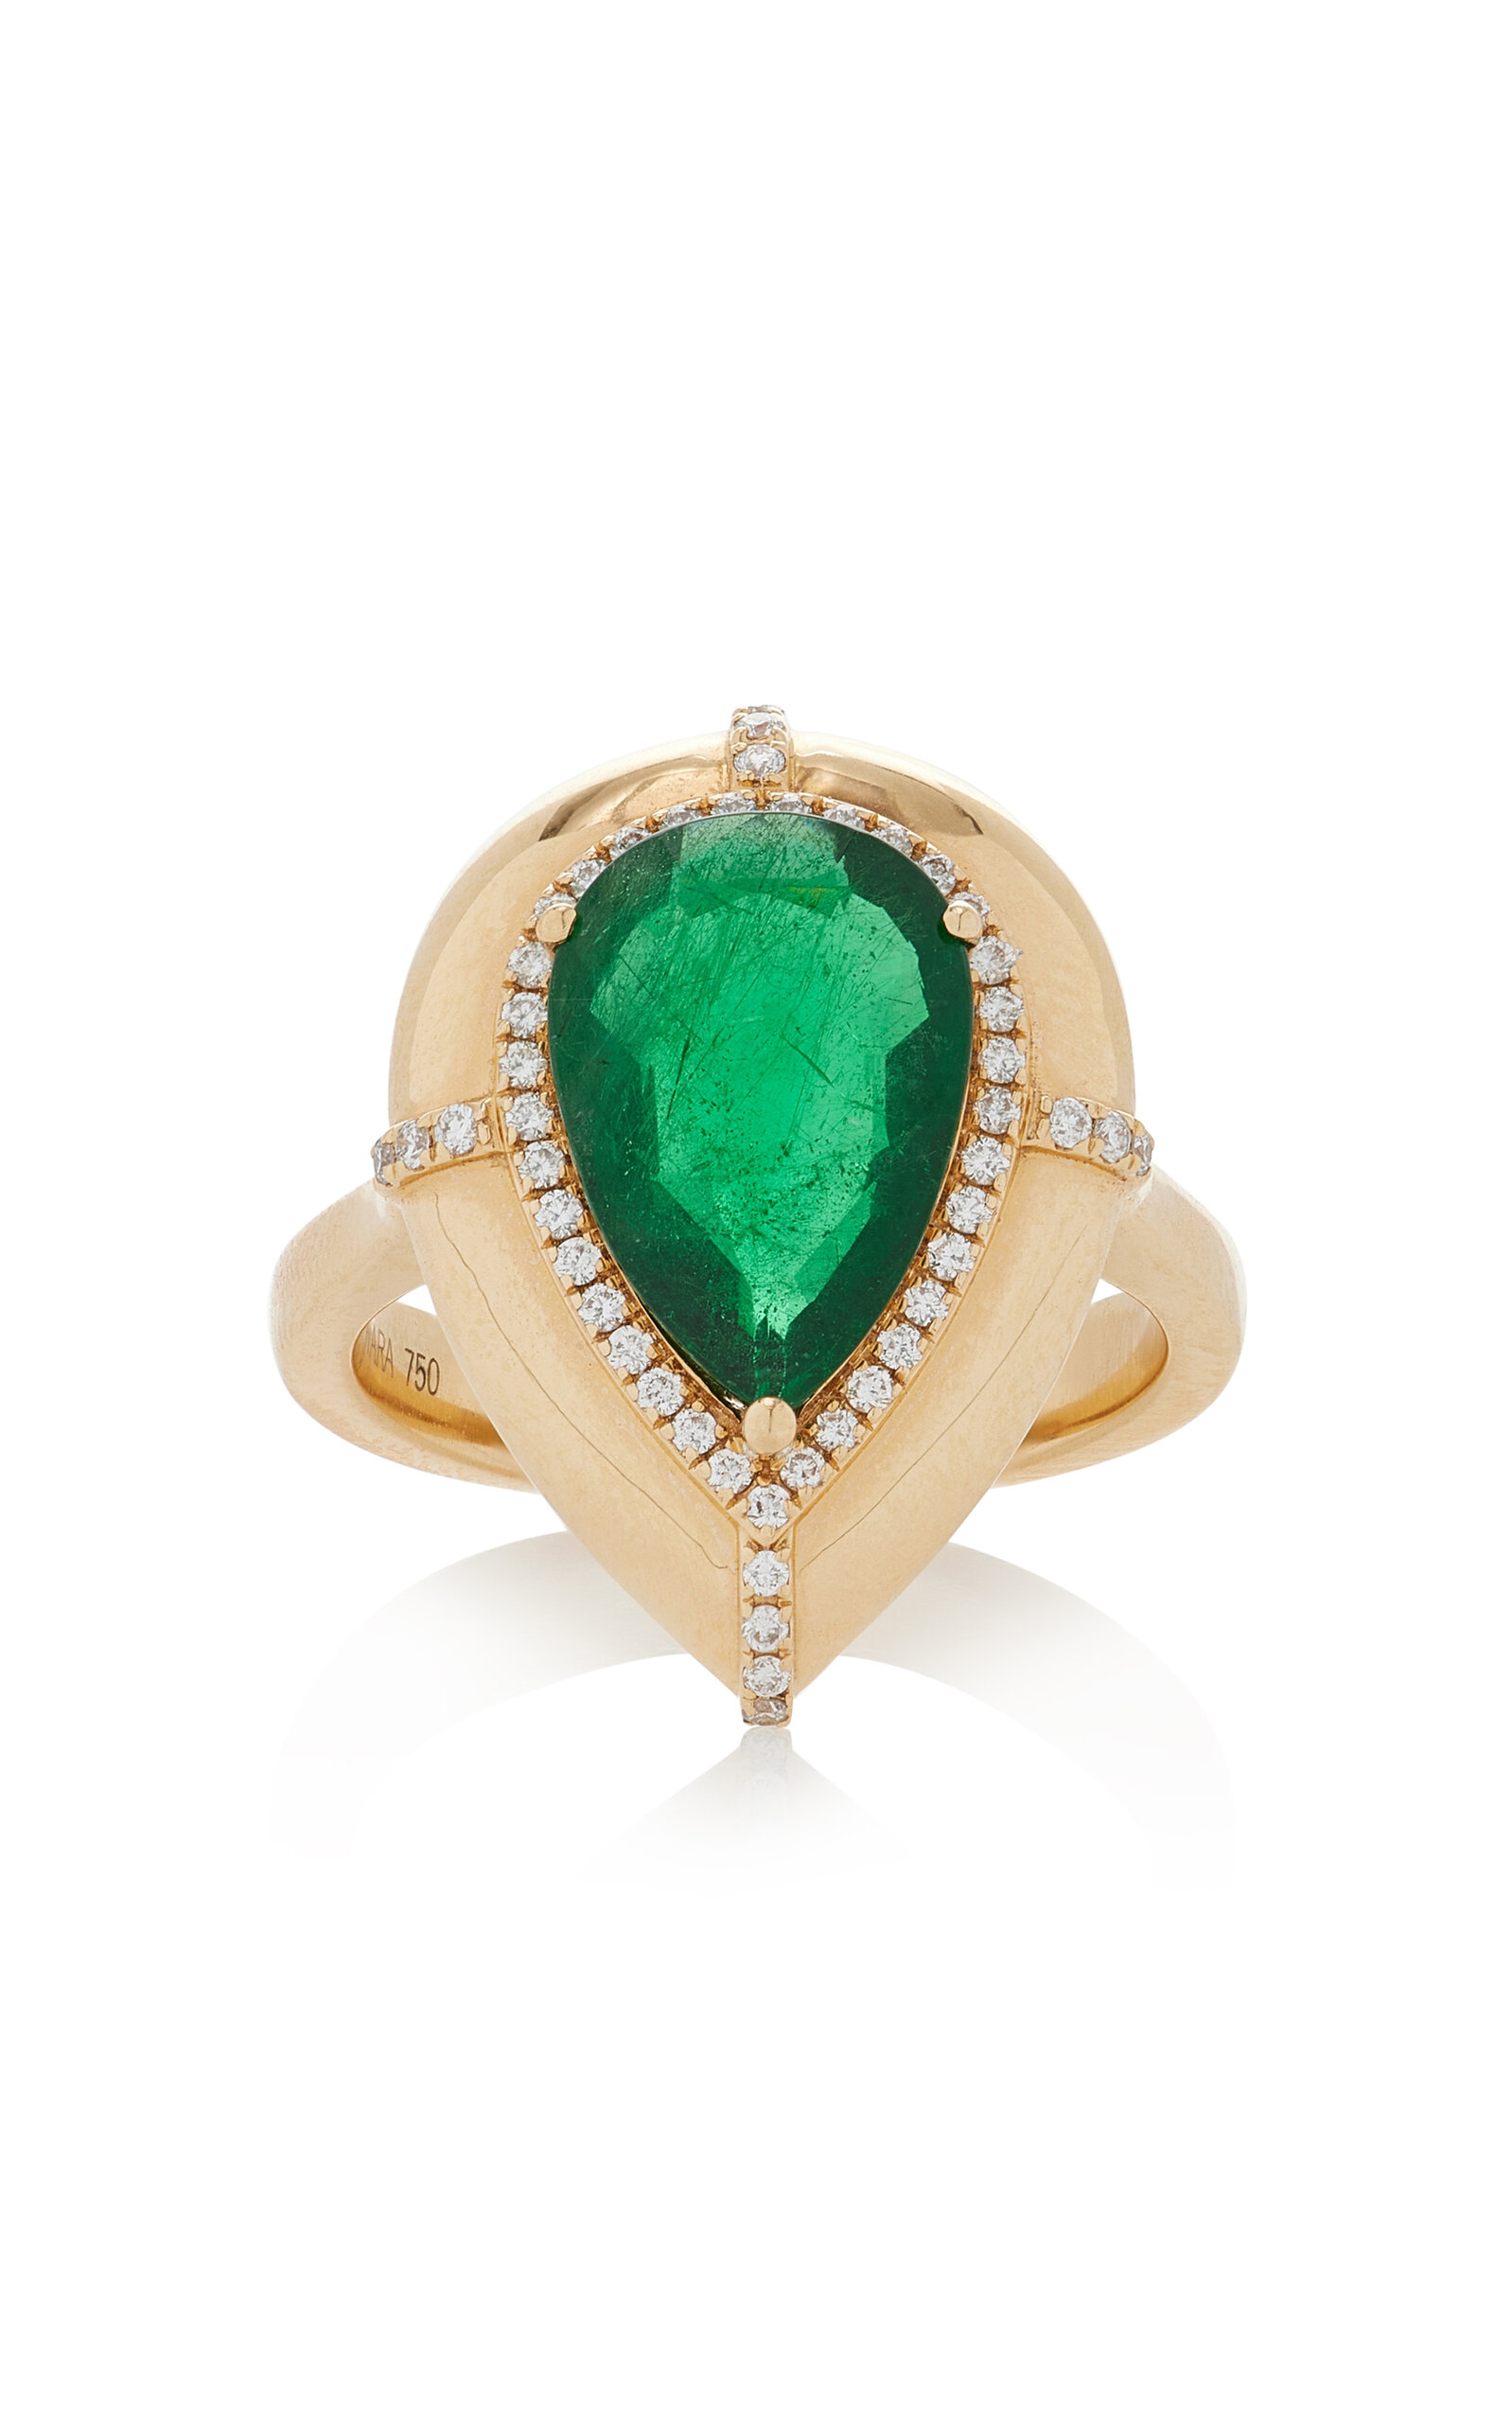 18K Yellow Gold Emerald and Diamond Ring